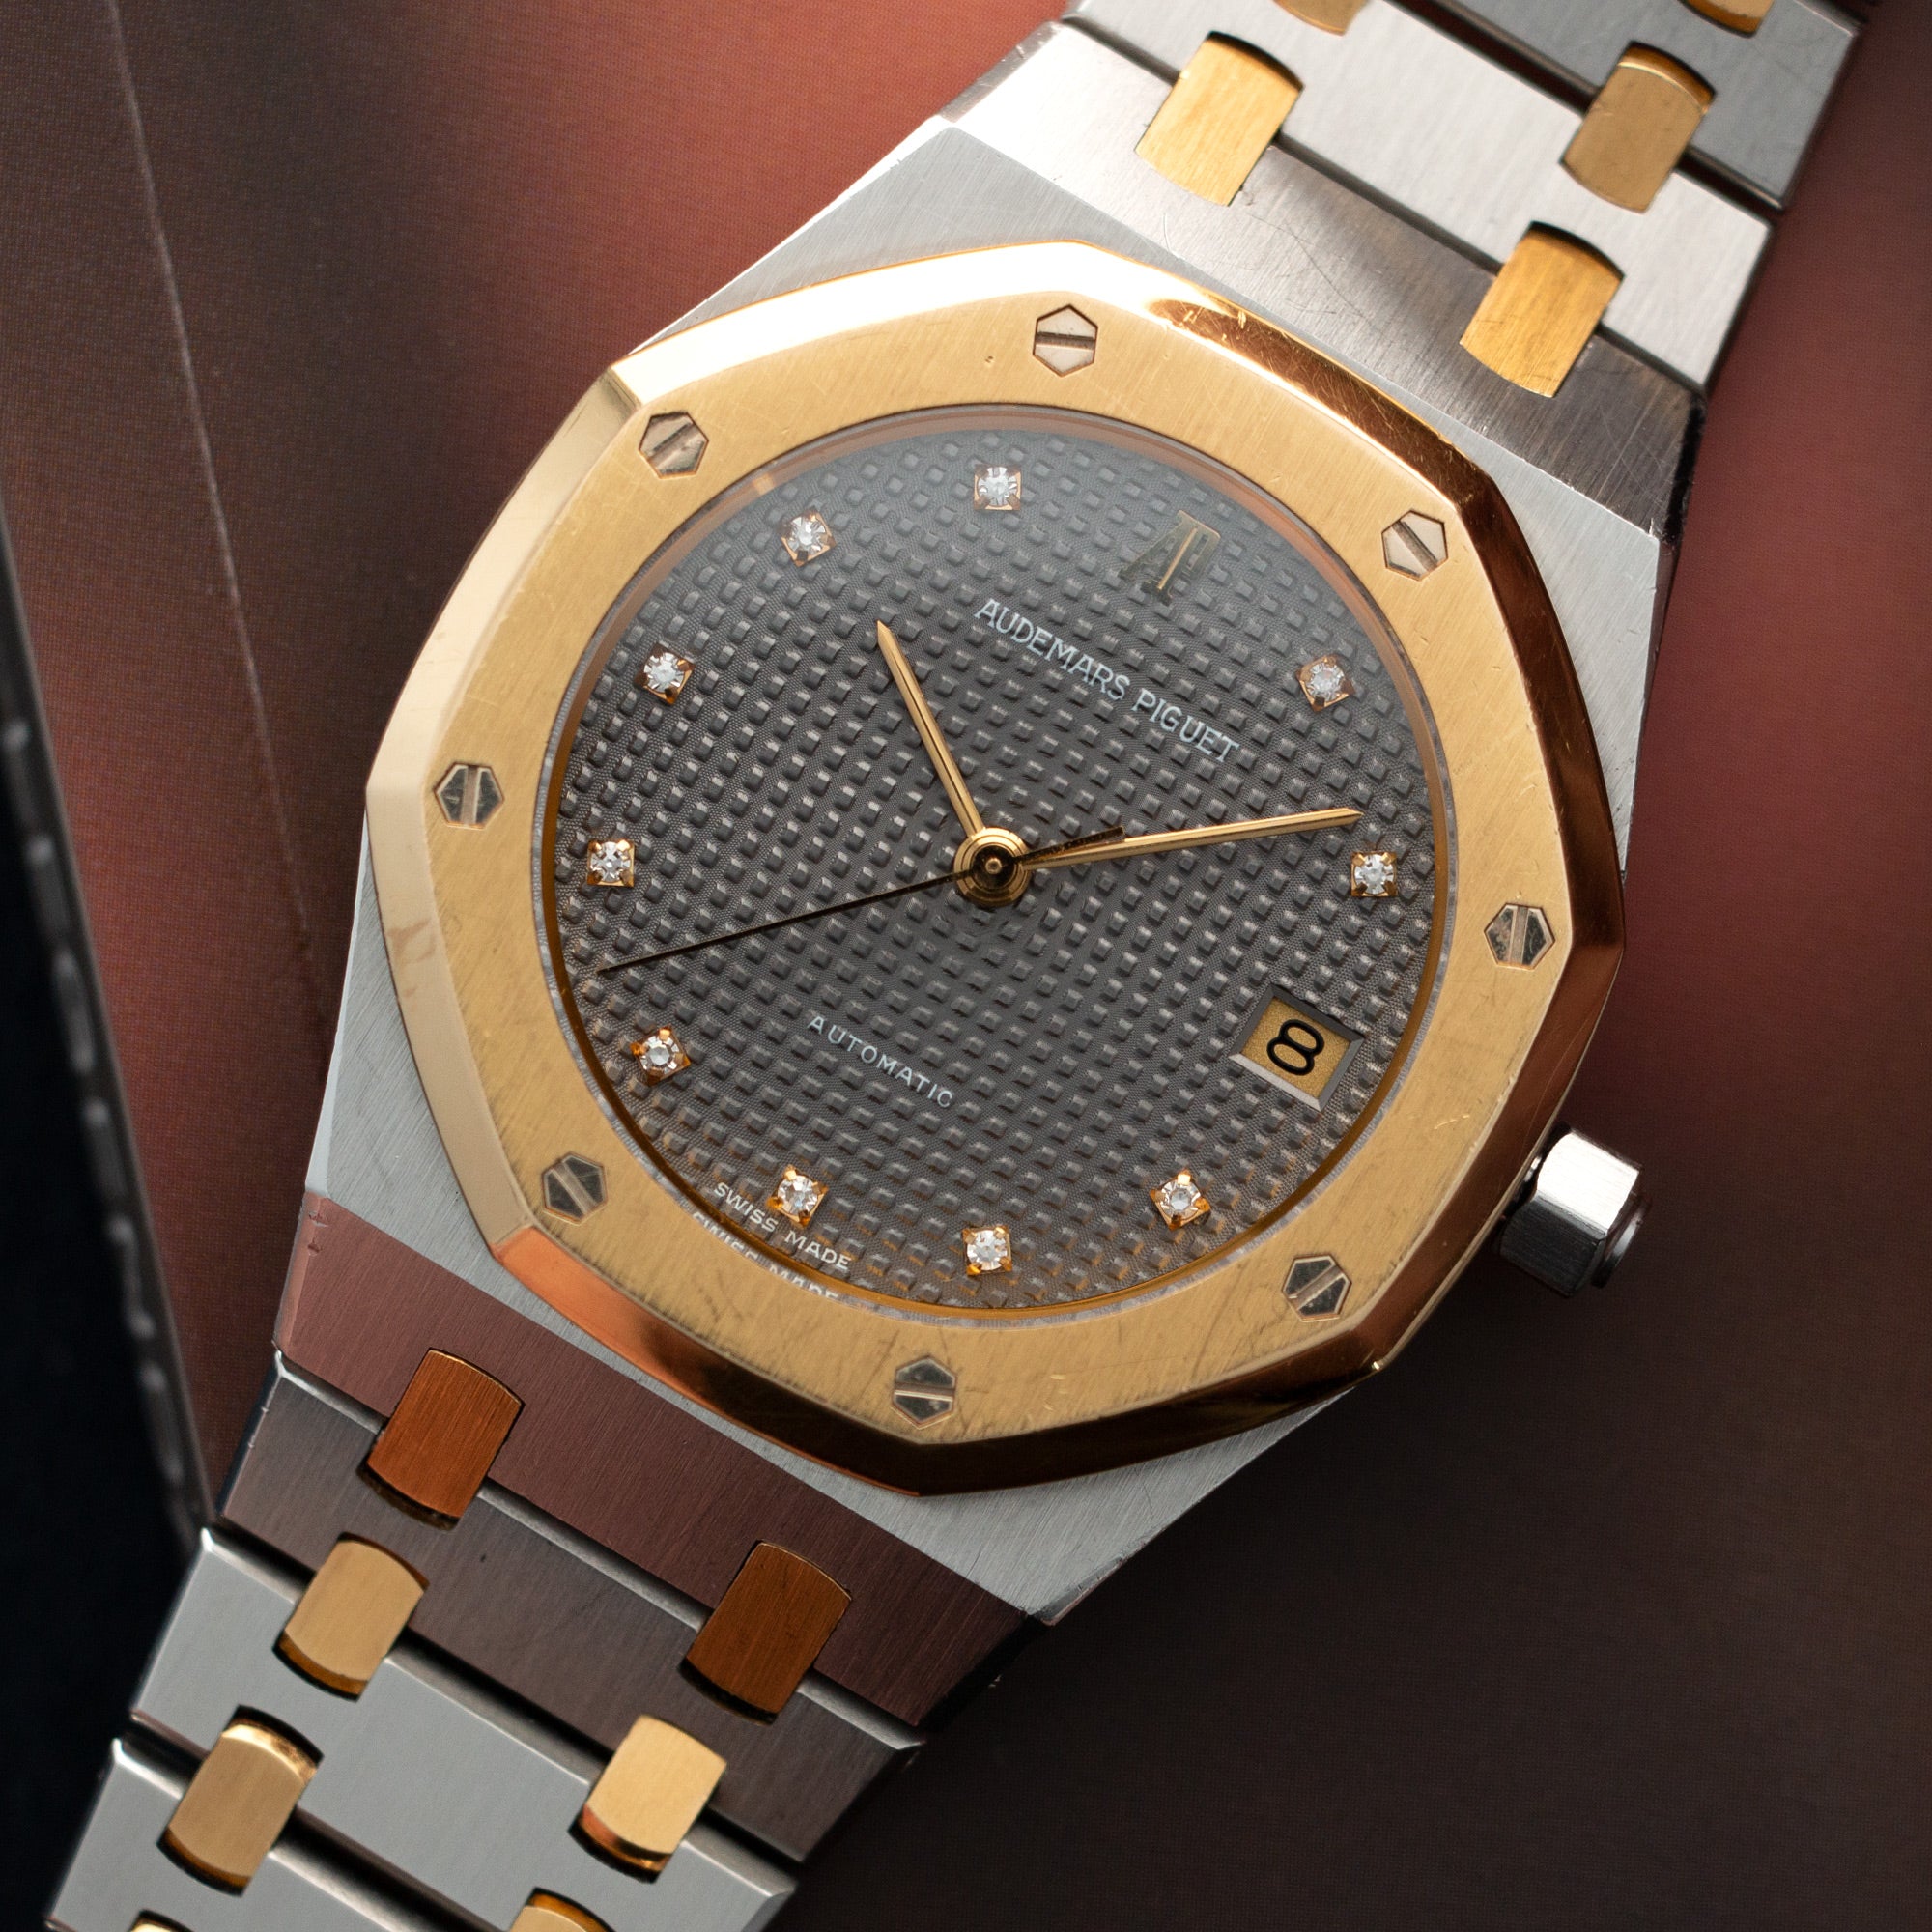 Audemars Piguet - Audemars Piguet Two-Tone Royal Oak Watch with Diamond Markers - The Keystone Watches